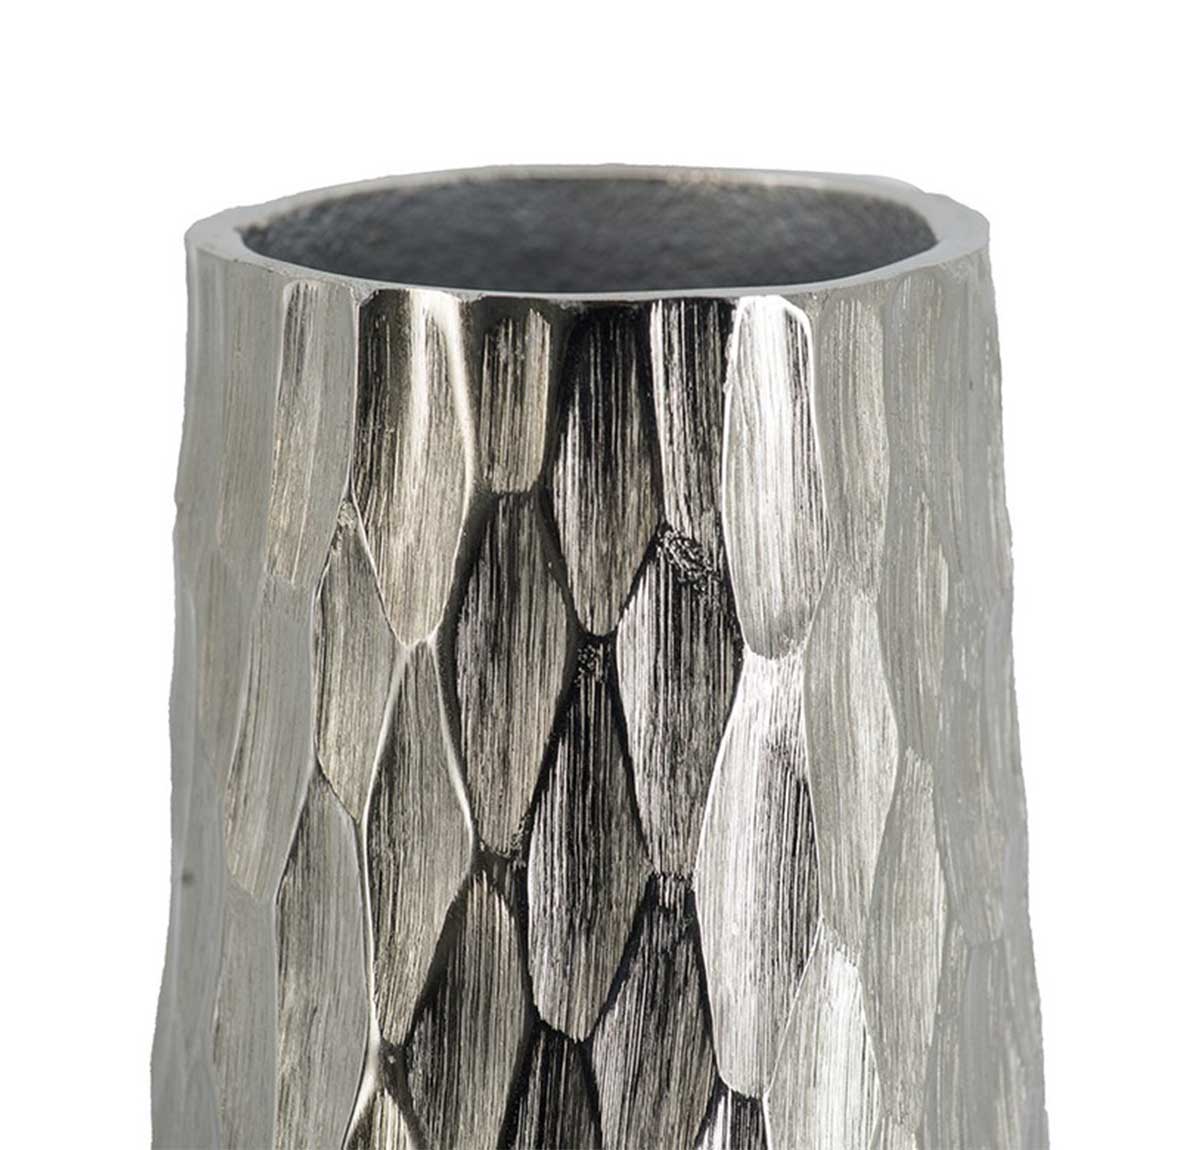 Diamond Textured Oblong Vase (49cm tall)